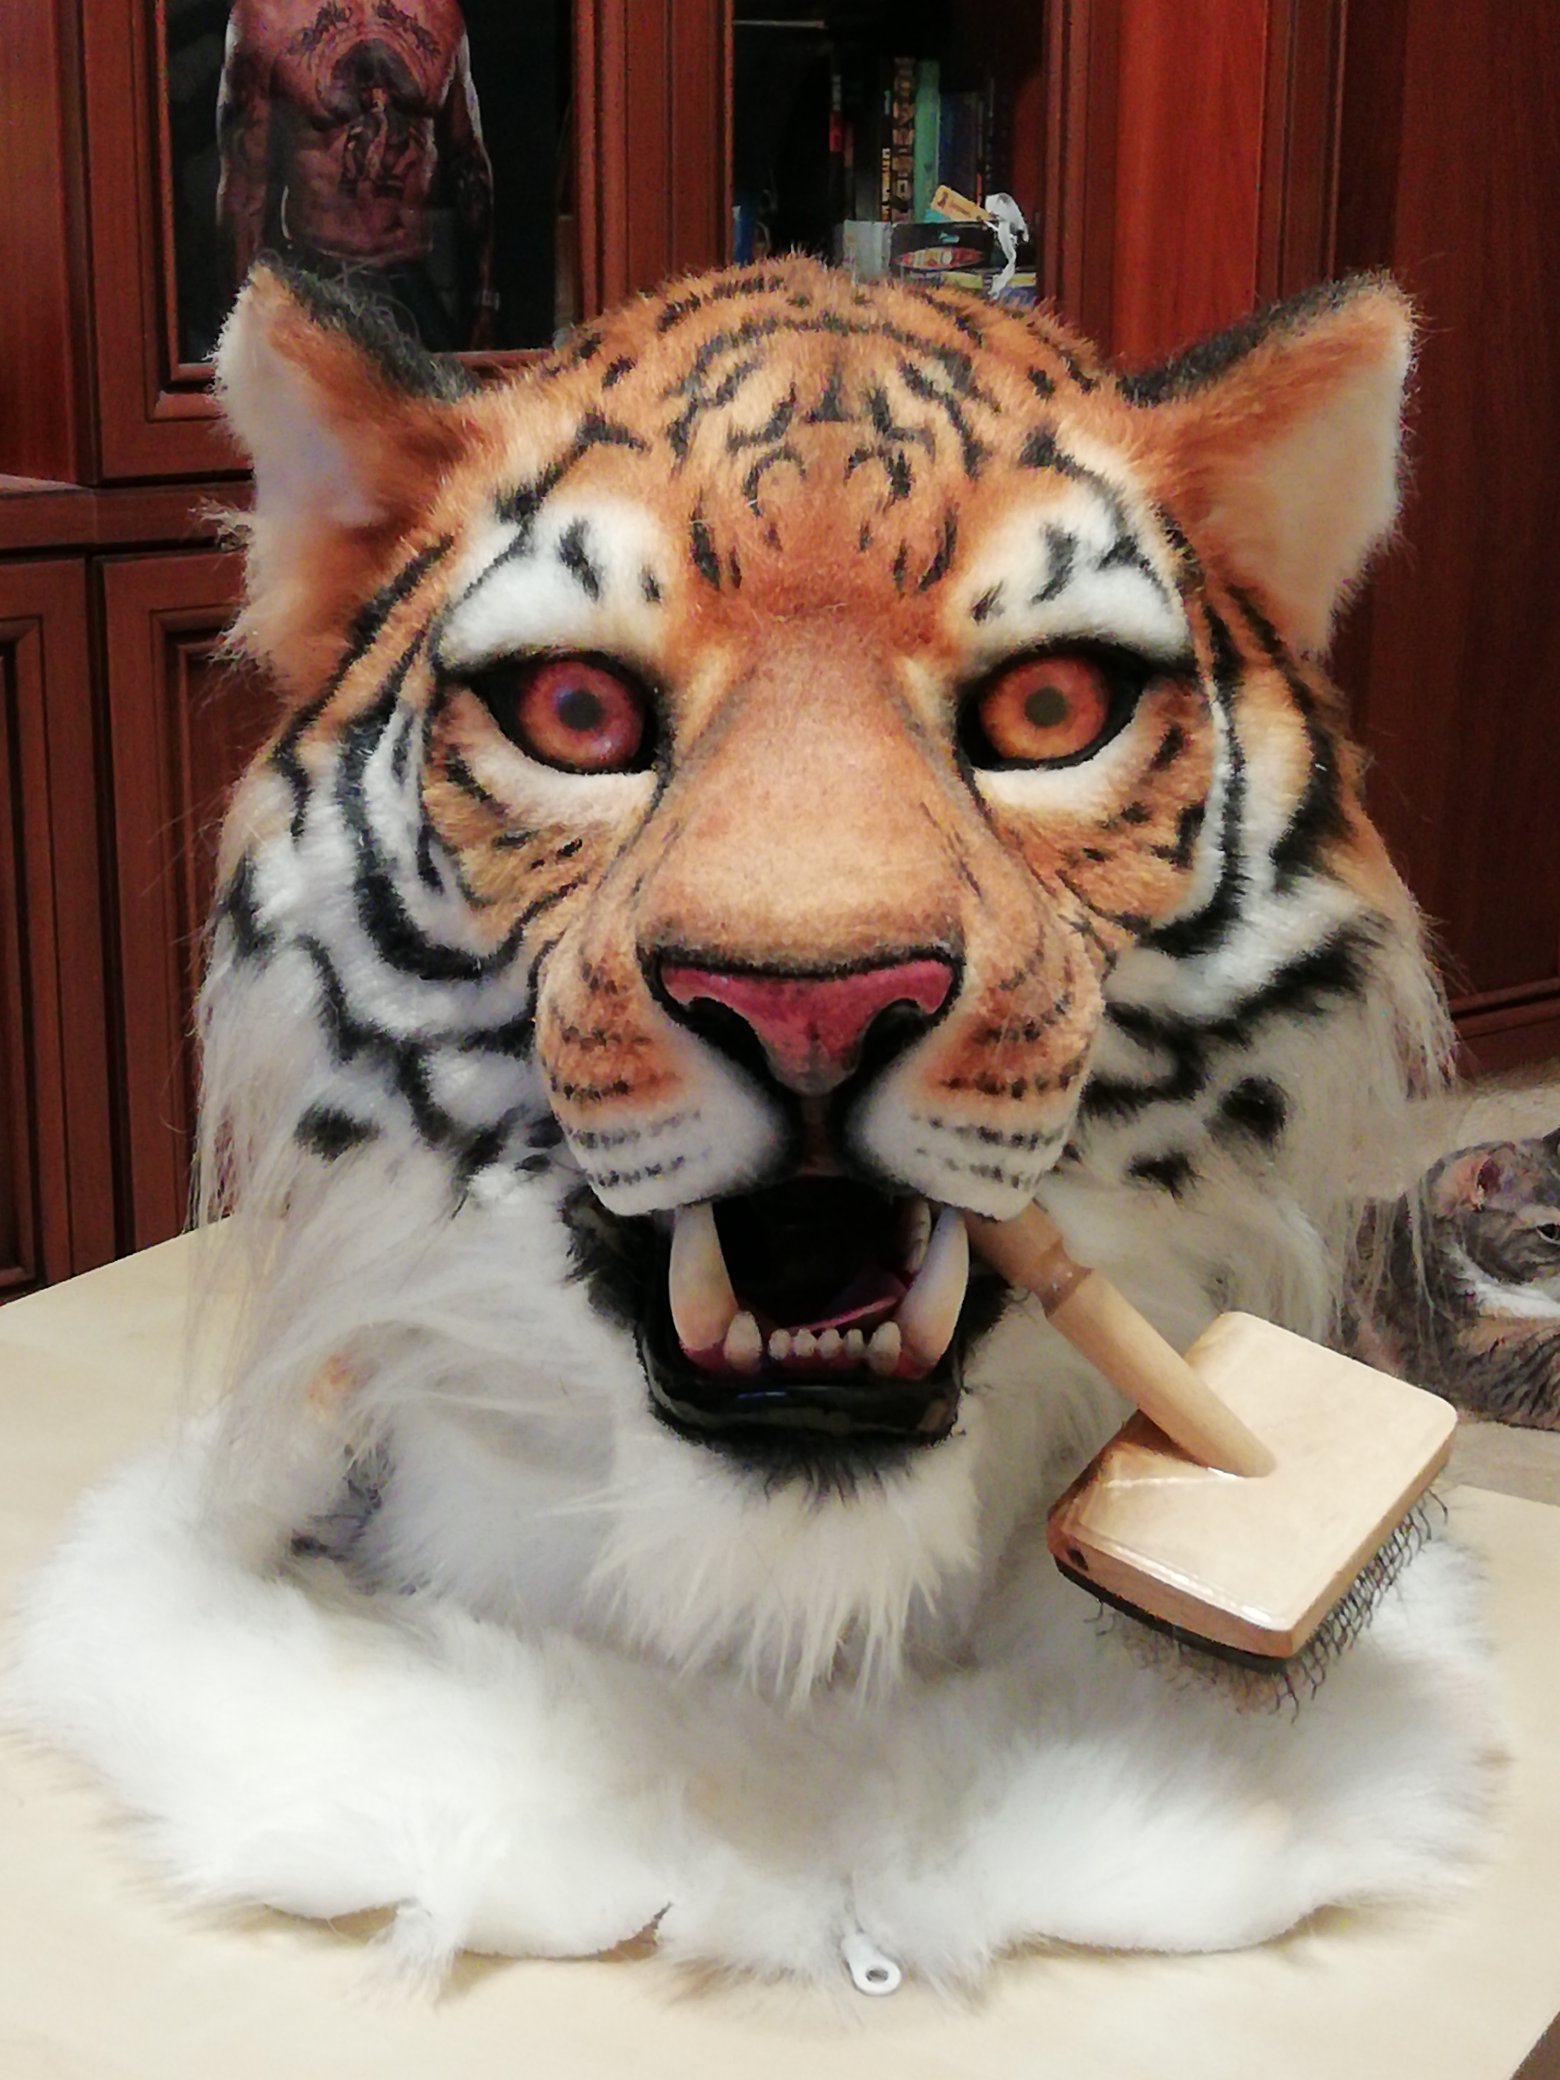 تويتر \ على تويتر: "Finished the random tiger mask! Paws and tail are next to be done. Will be avaliable on Furbuy or Etsy soon ;) #tiger #liger #тигр #лигр #feline #